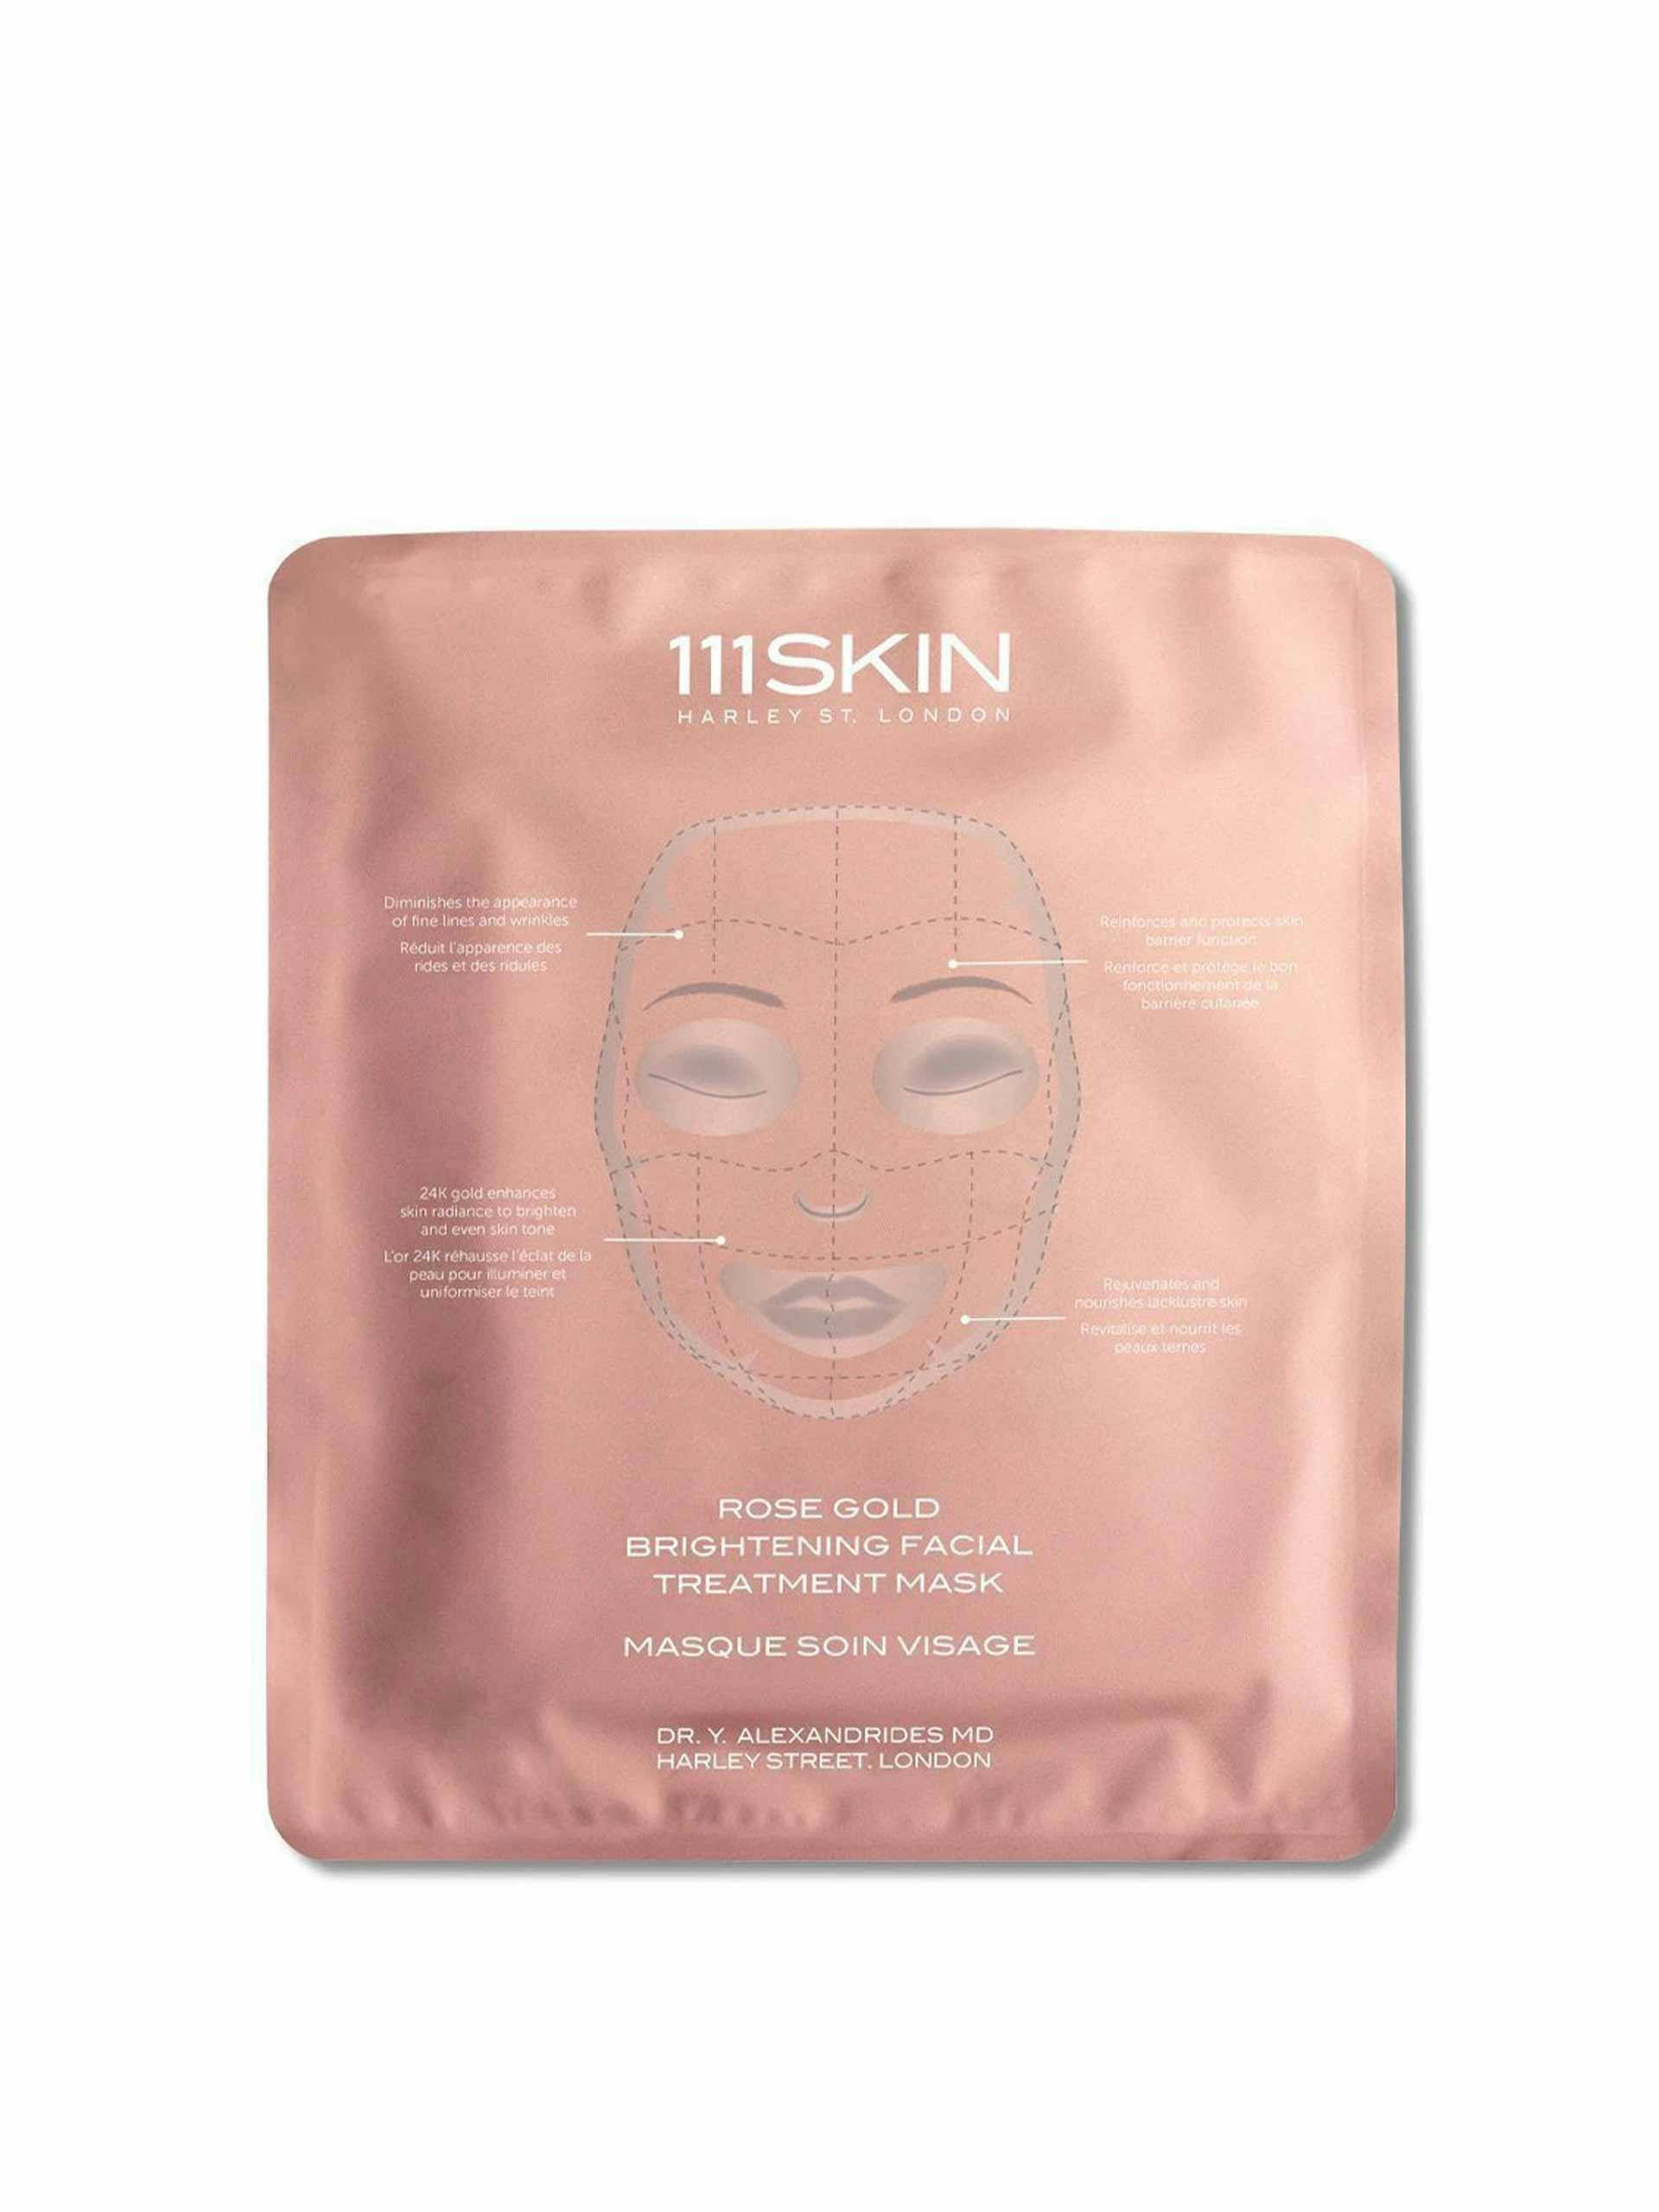 Rose-gold brightening facial treatment mask